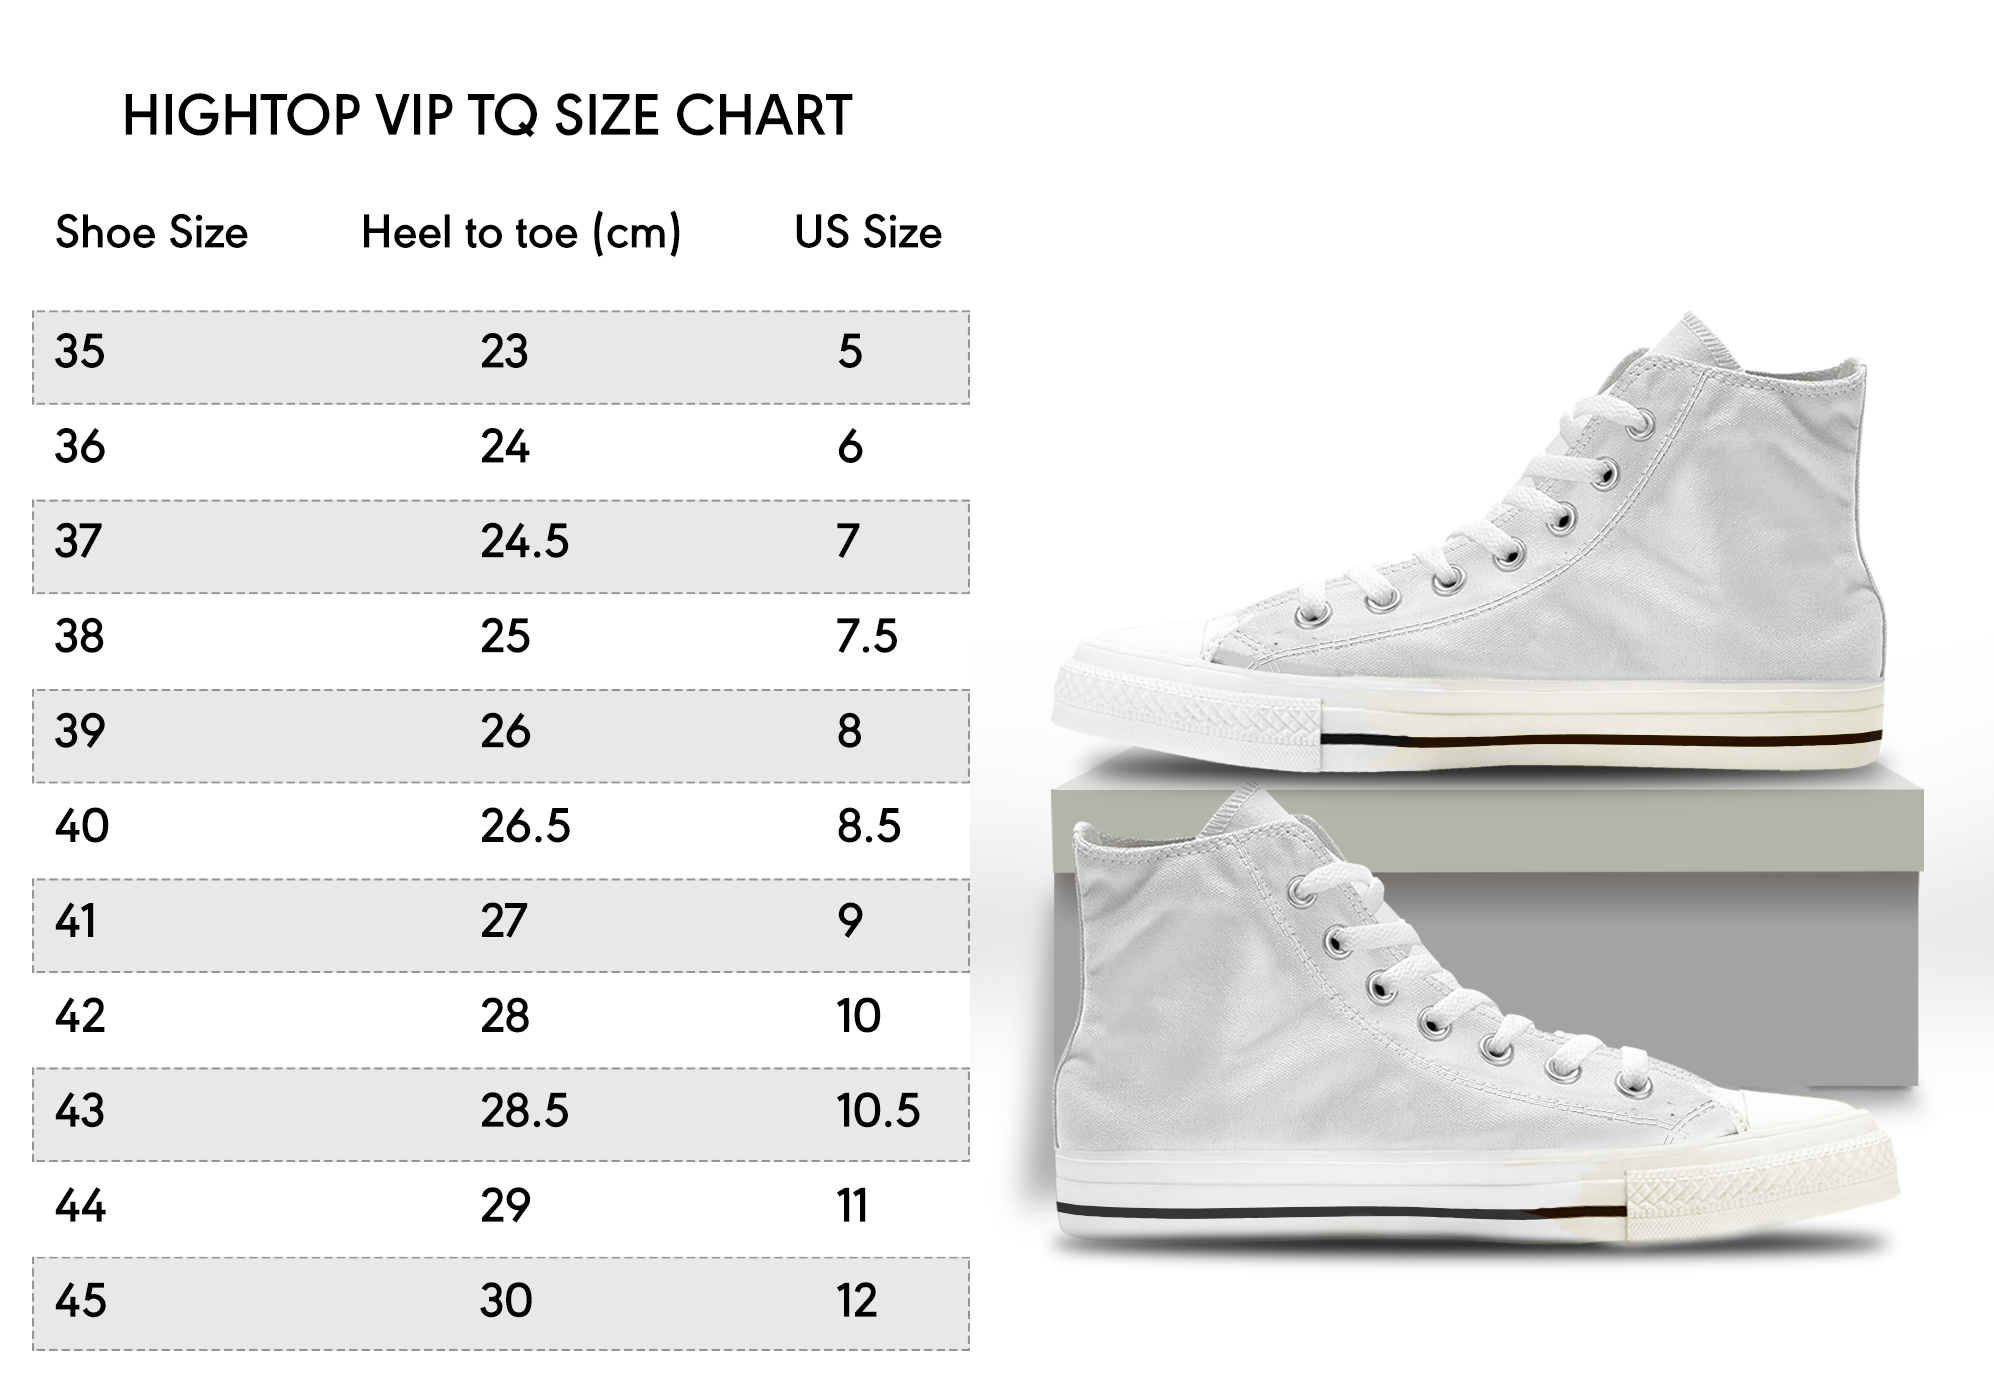 hightop vip size chart